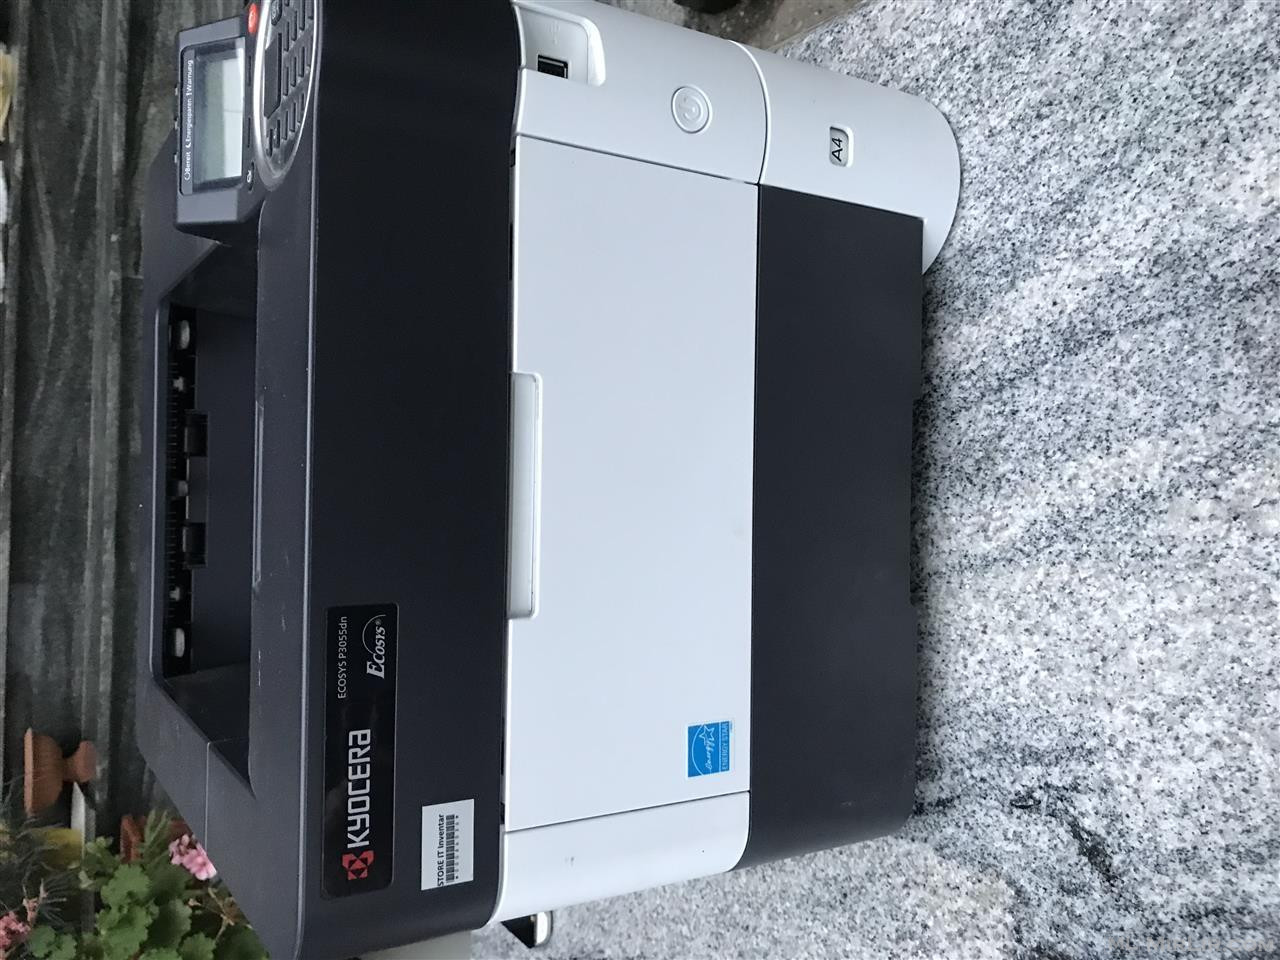 Shitet printer